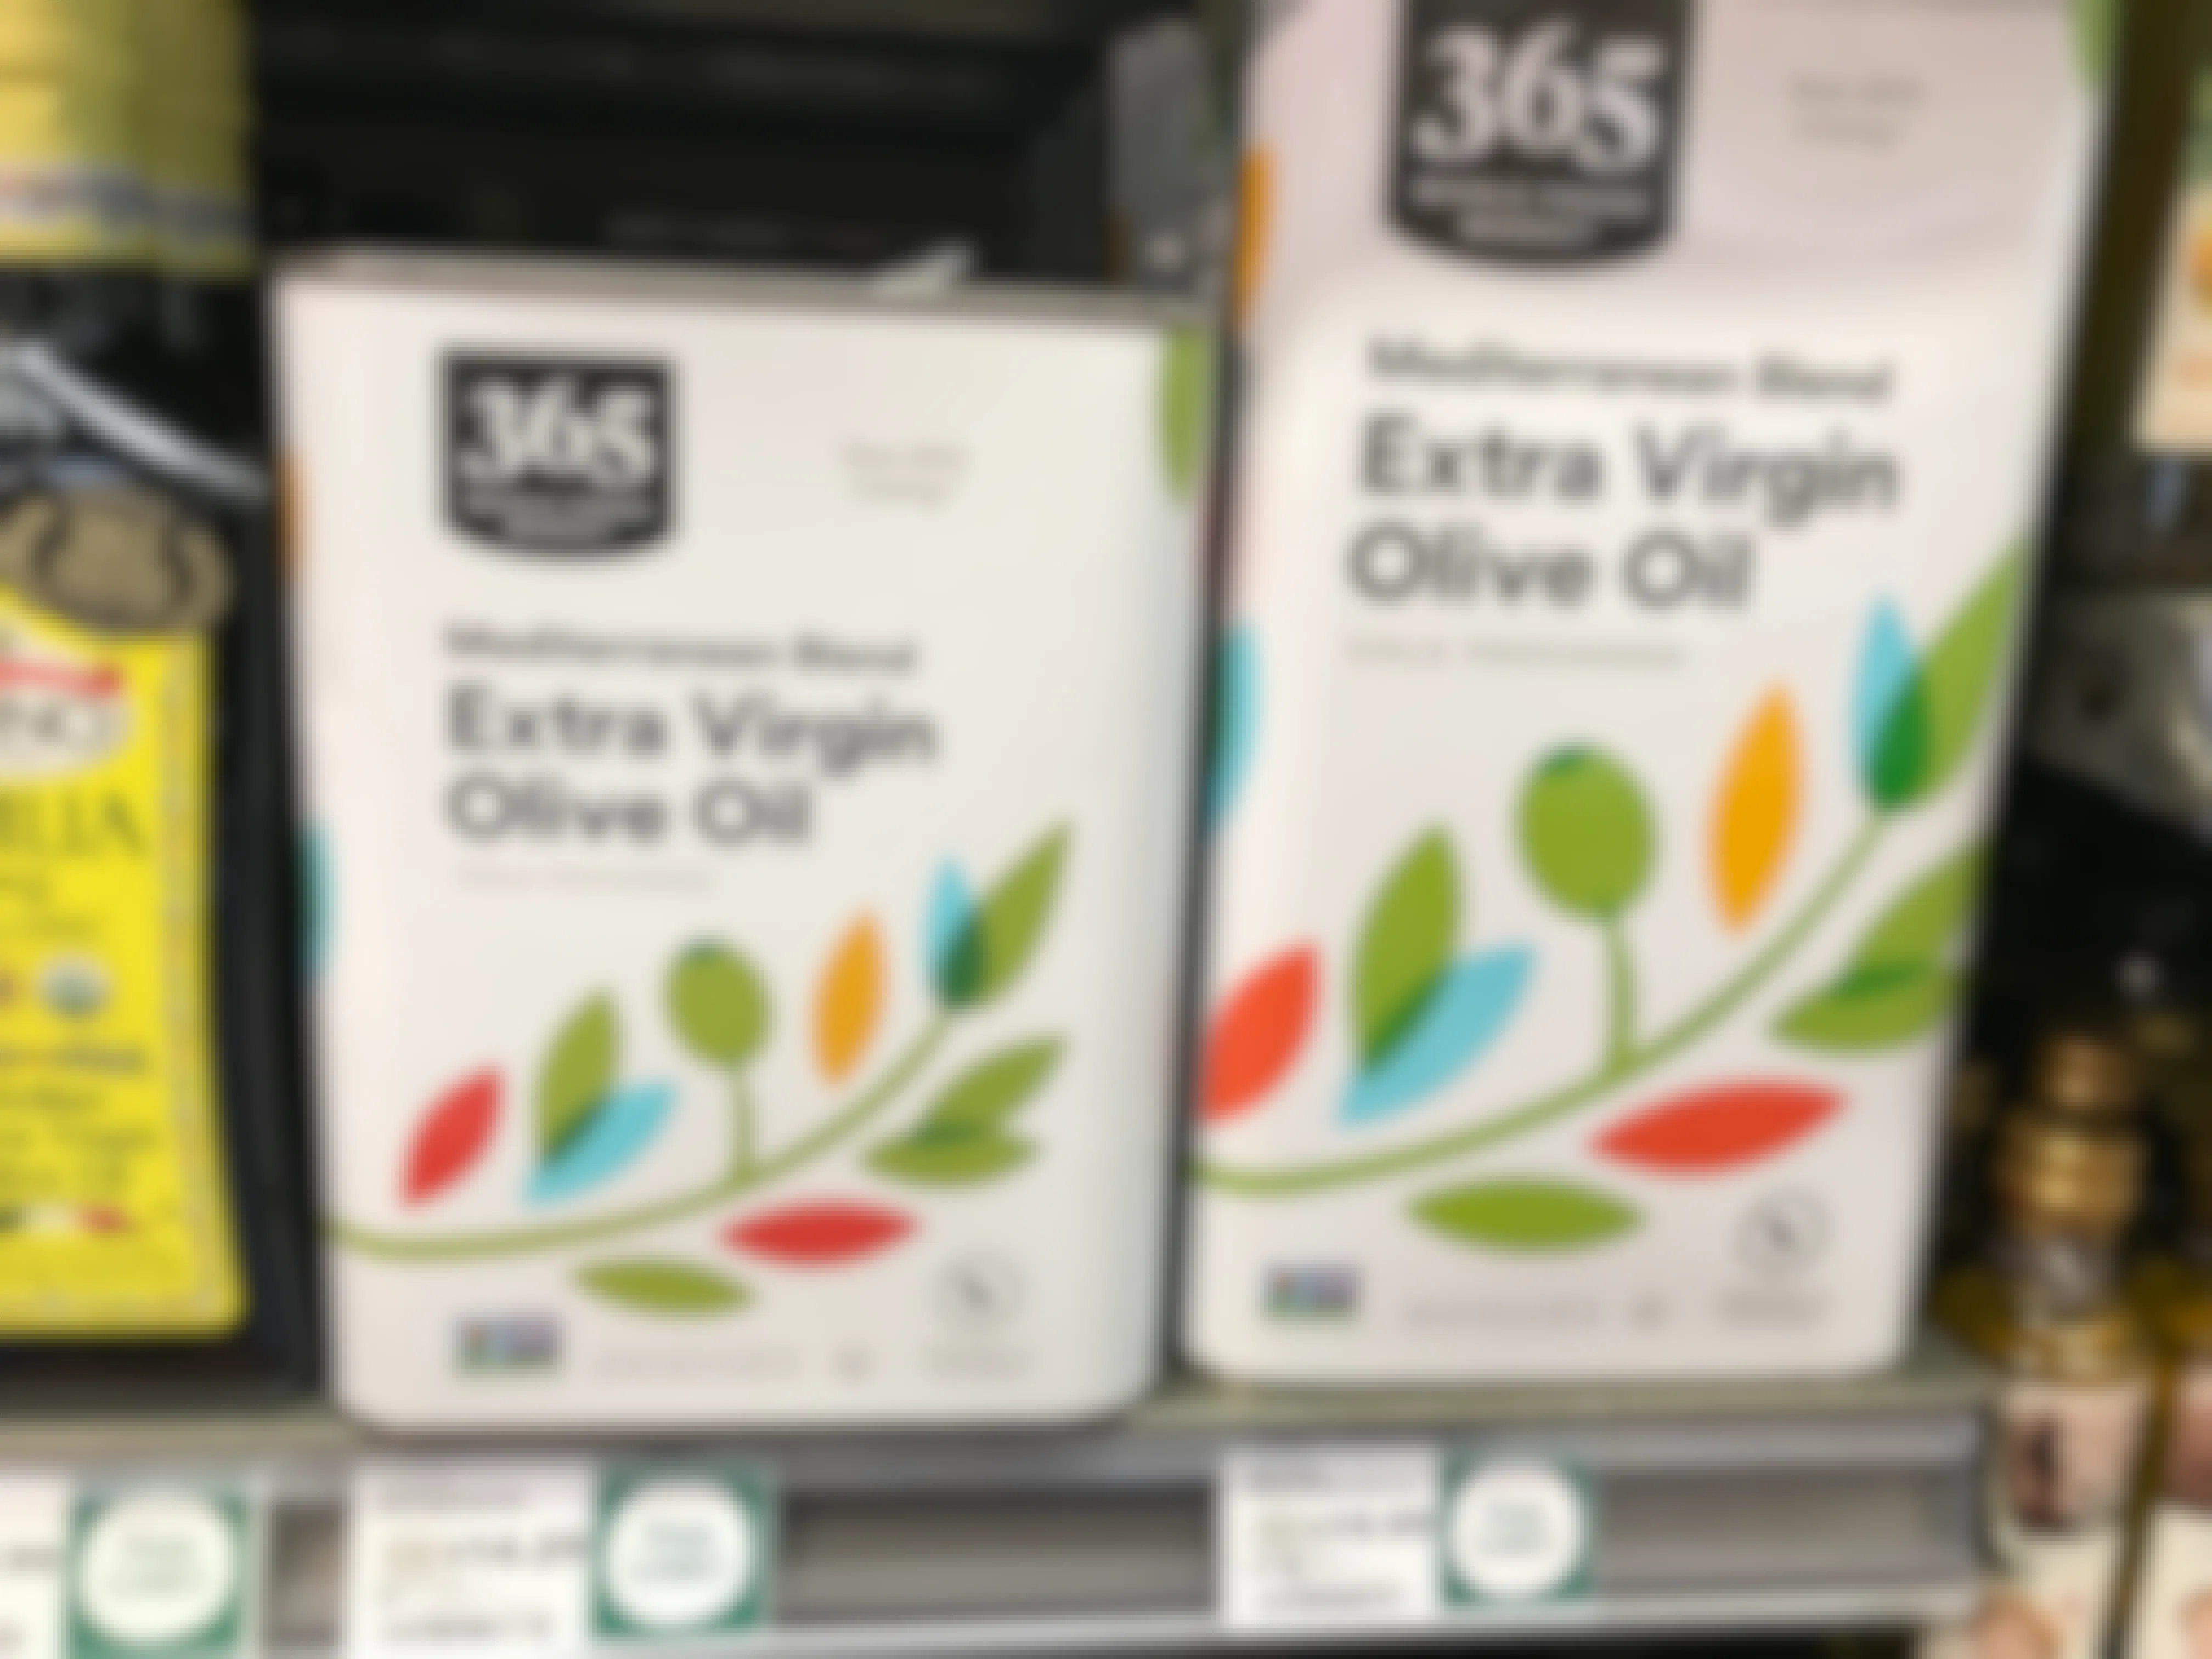 Mediterranean Blend olive oil on a Whole Foods shelf.